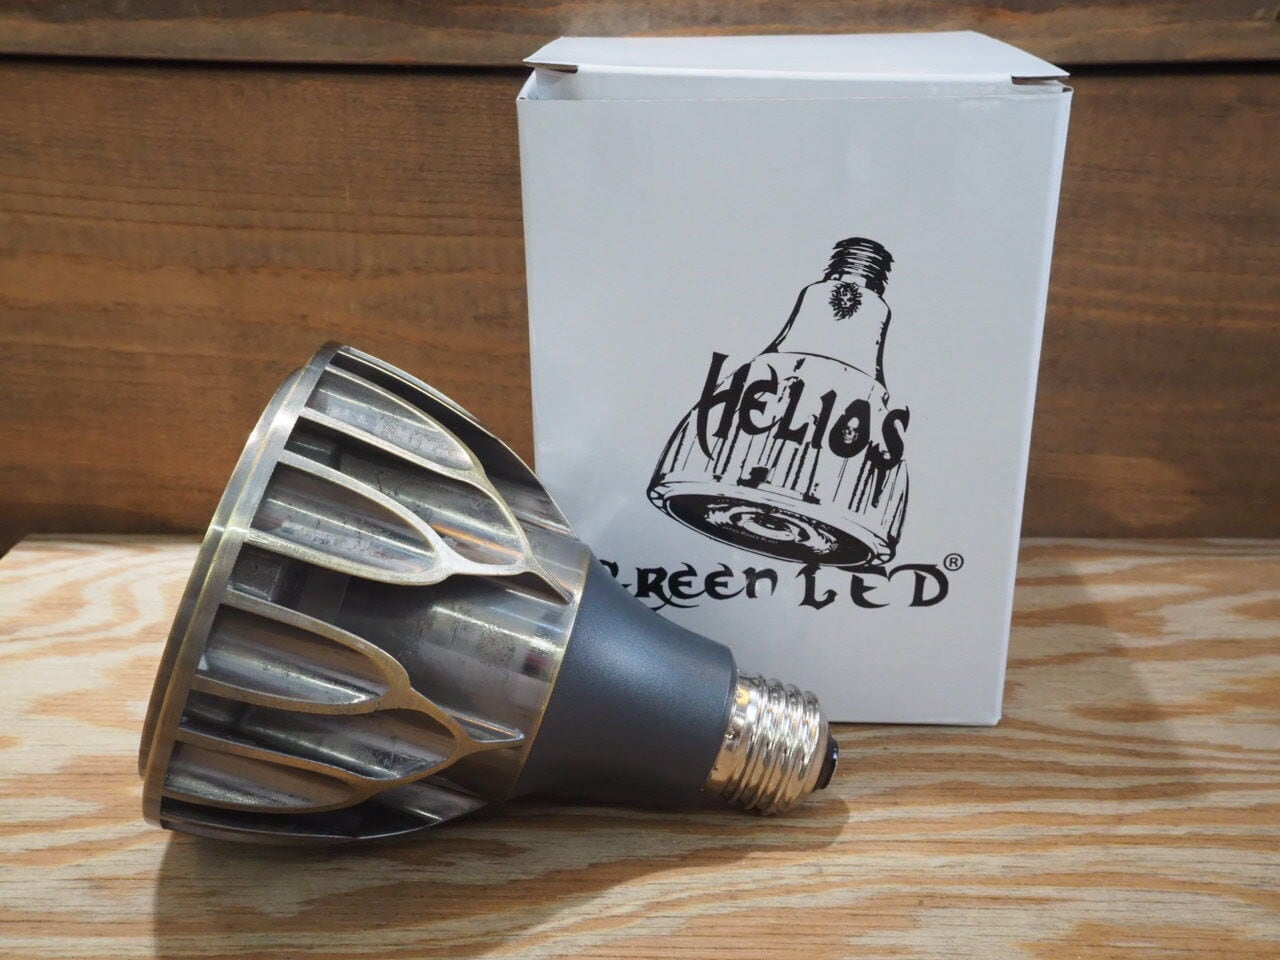 Helios ヘリオス LED HG24 植物育成ライト VINTAGE